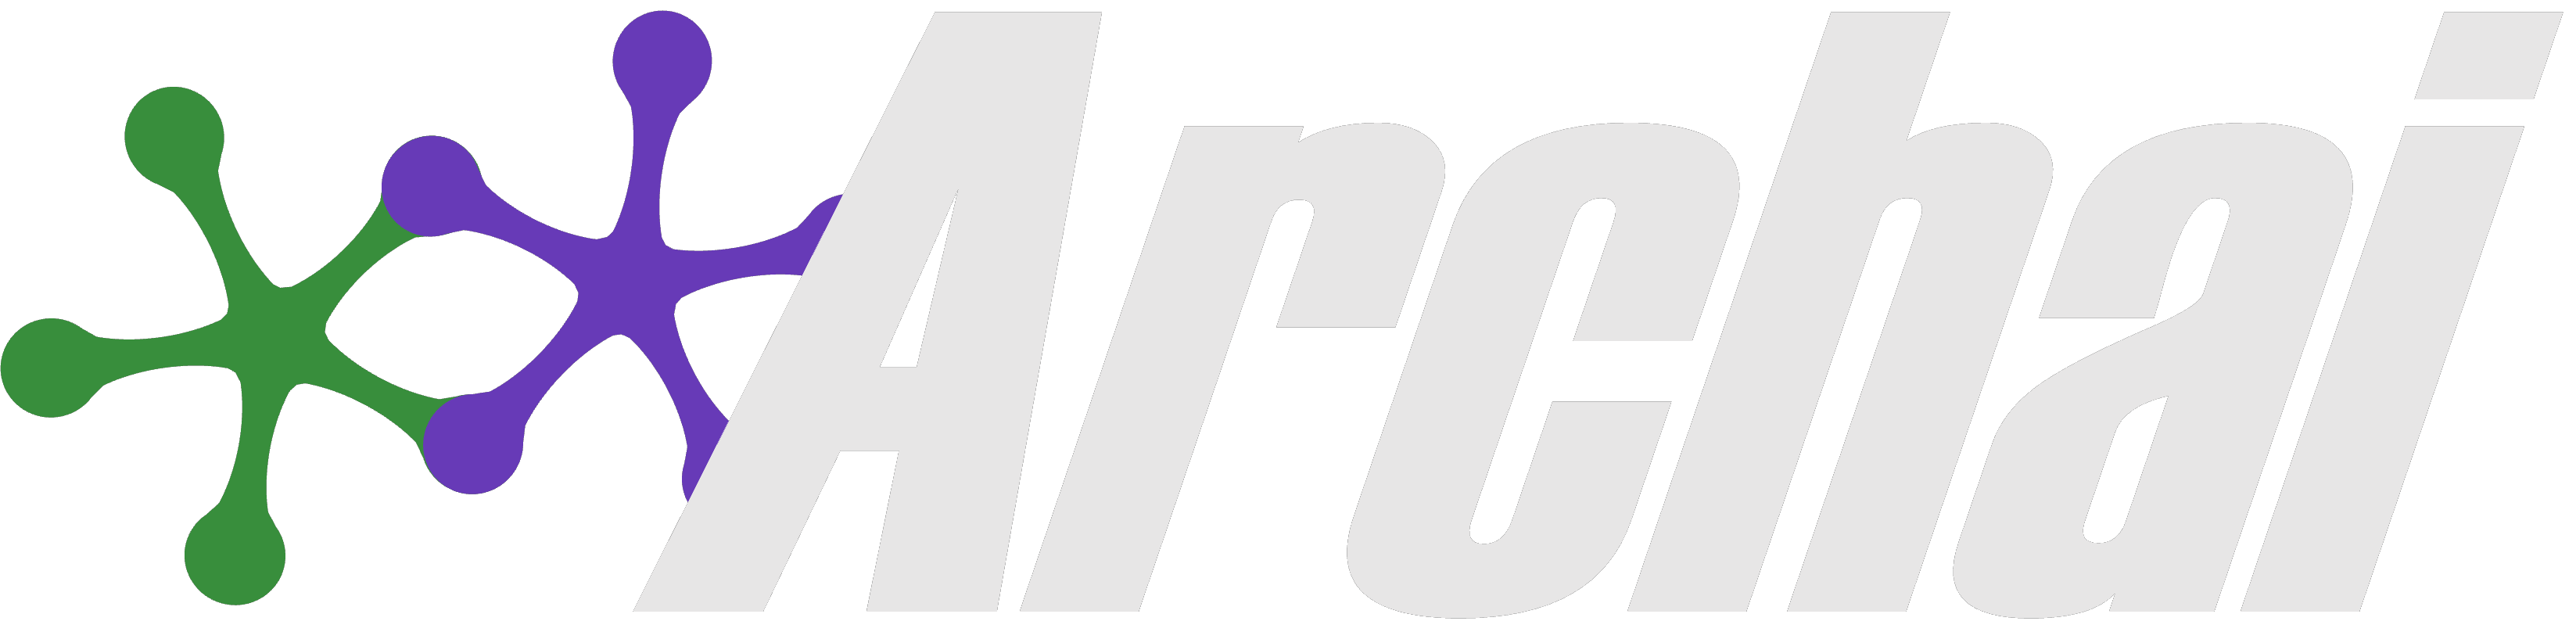 Archai logo